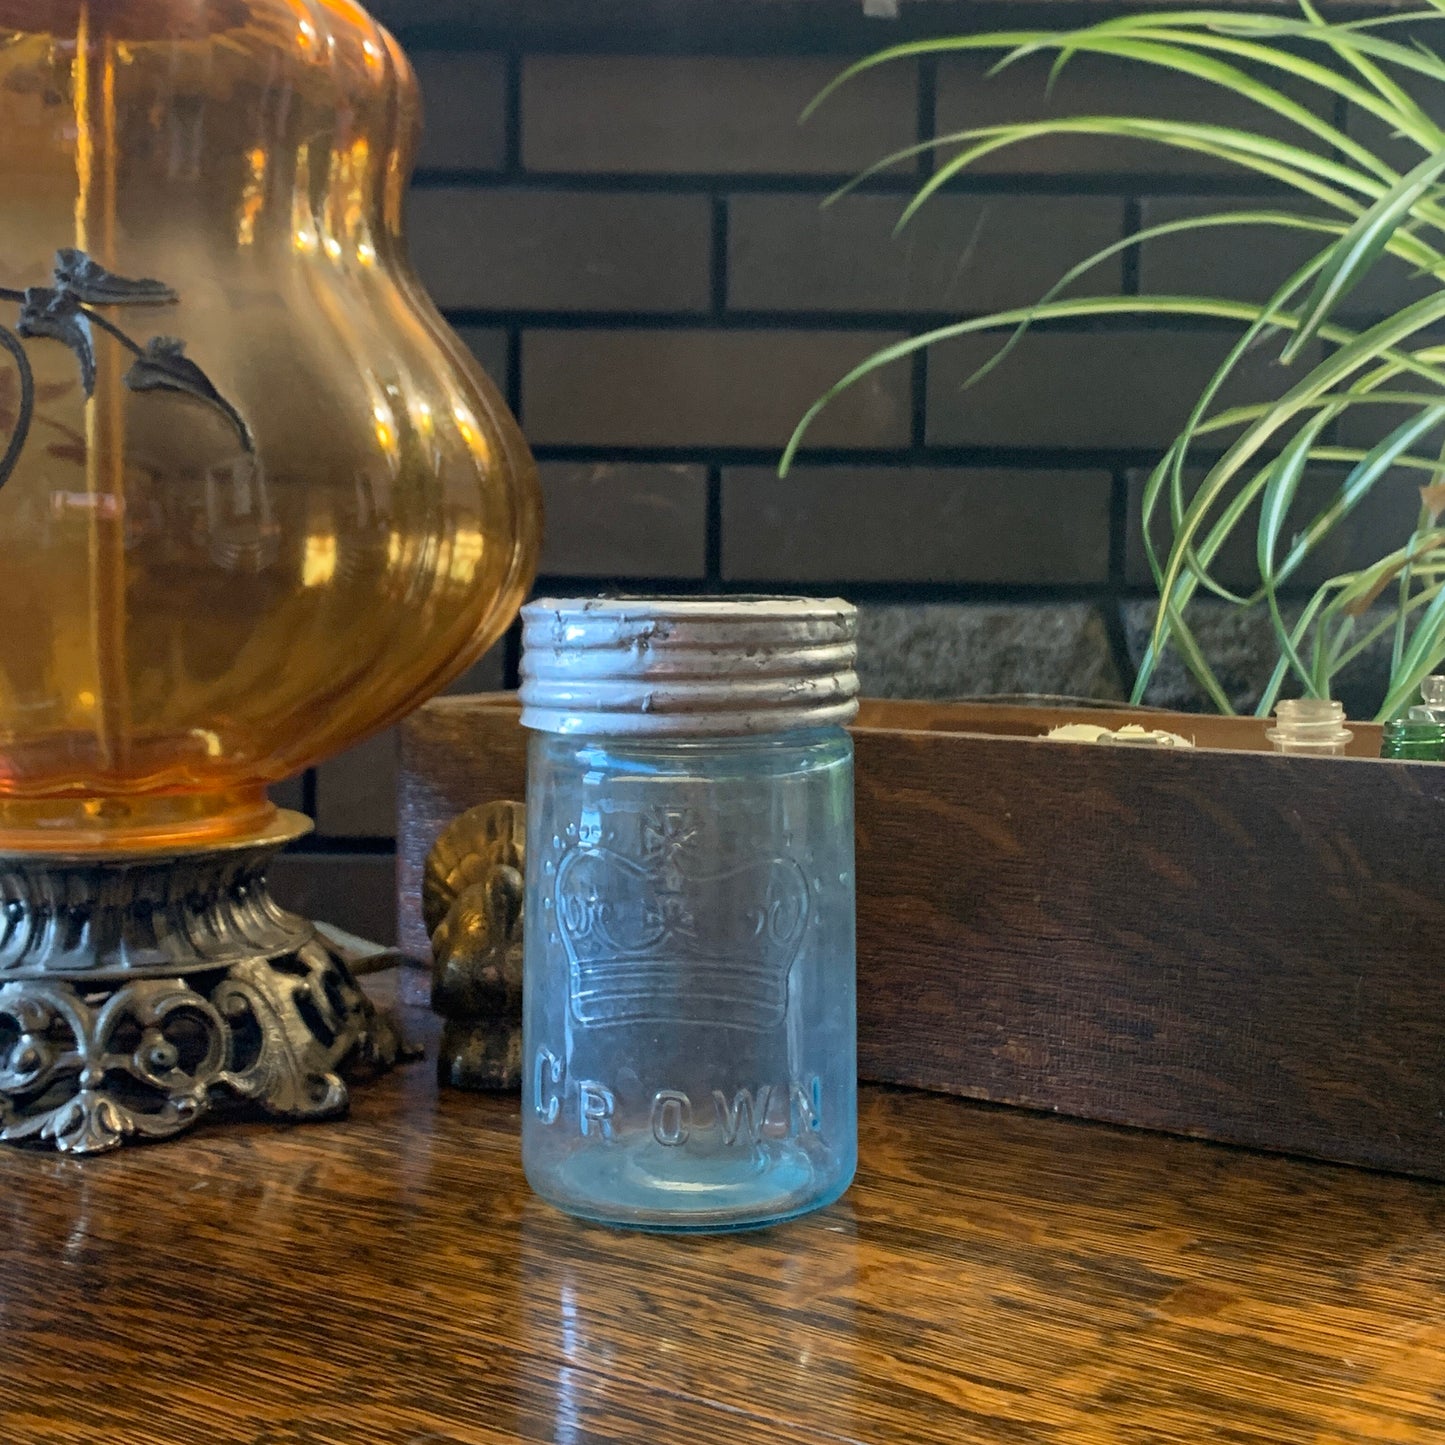 Antique Aqua Blue Crown Canning Jar